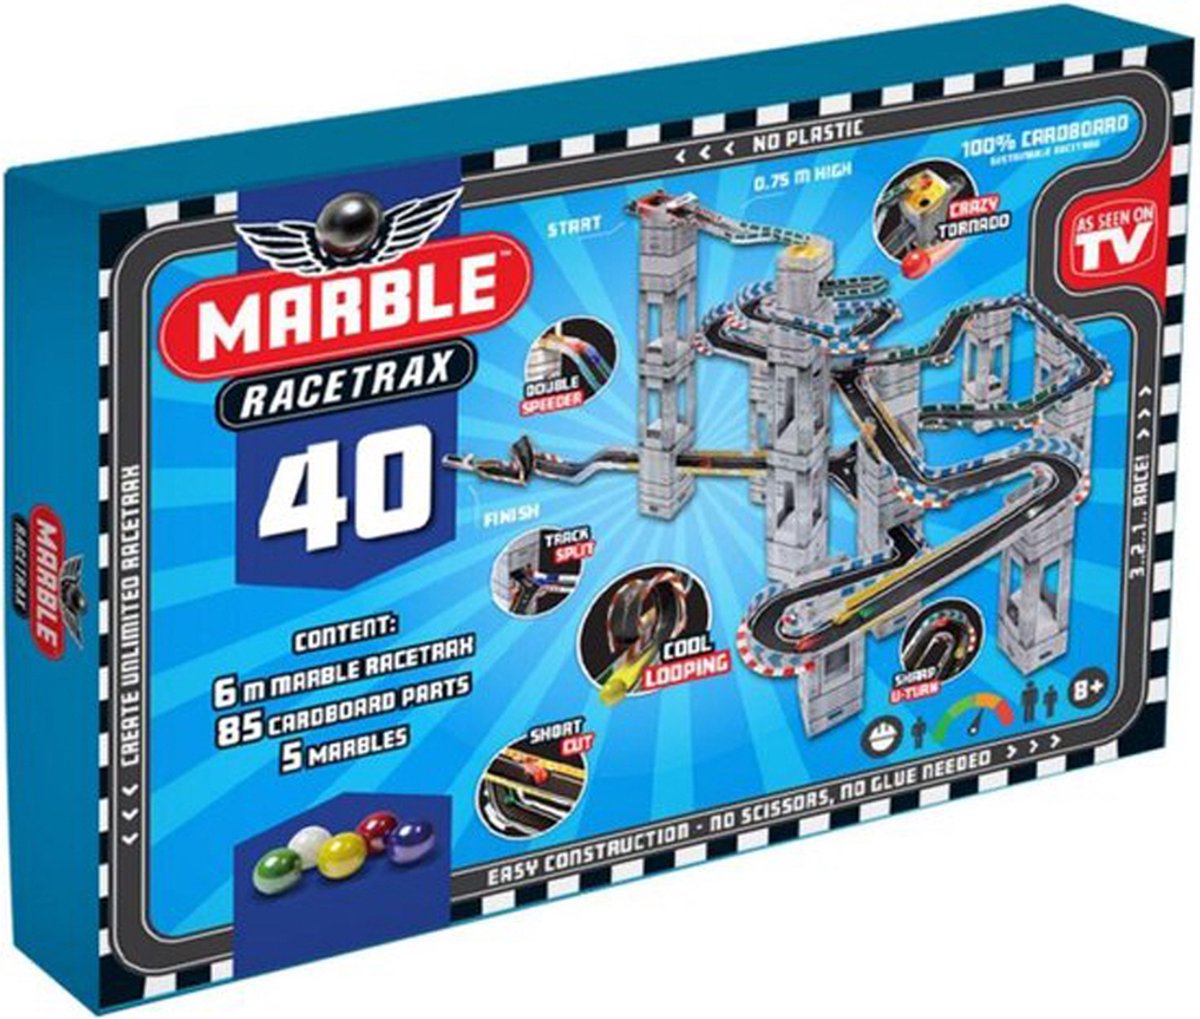 DW4Trading Marble Racetrax 40 - Racebaan - Knikkerbaan Set - 40 Sheets - 6 Meter